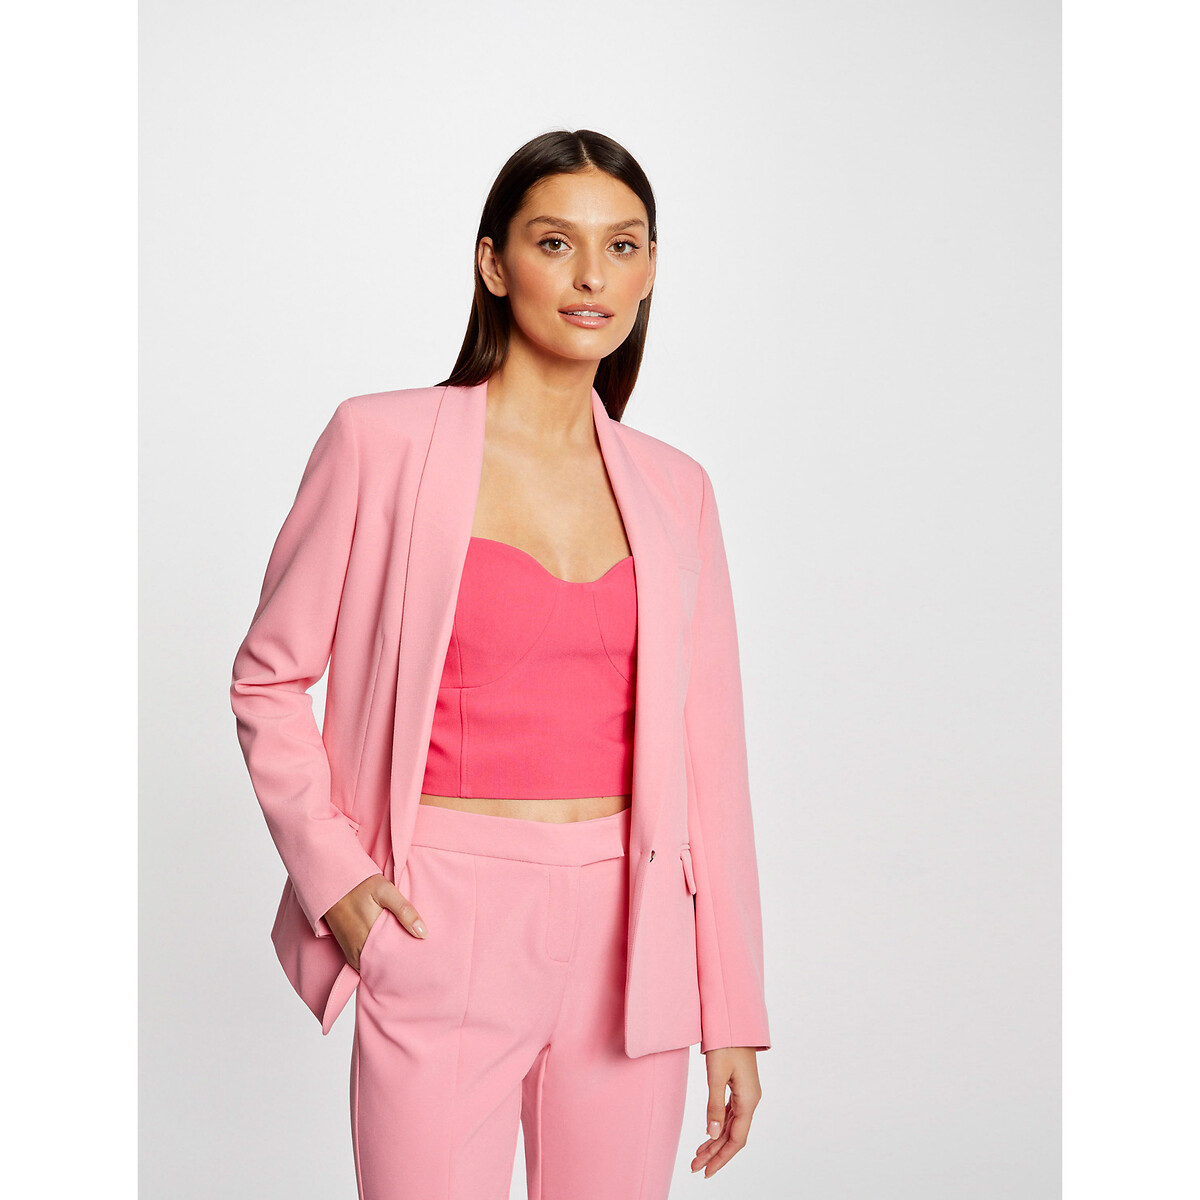 Straight fit blazer with shawl collar, pink, Morgan | La Redoute